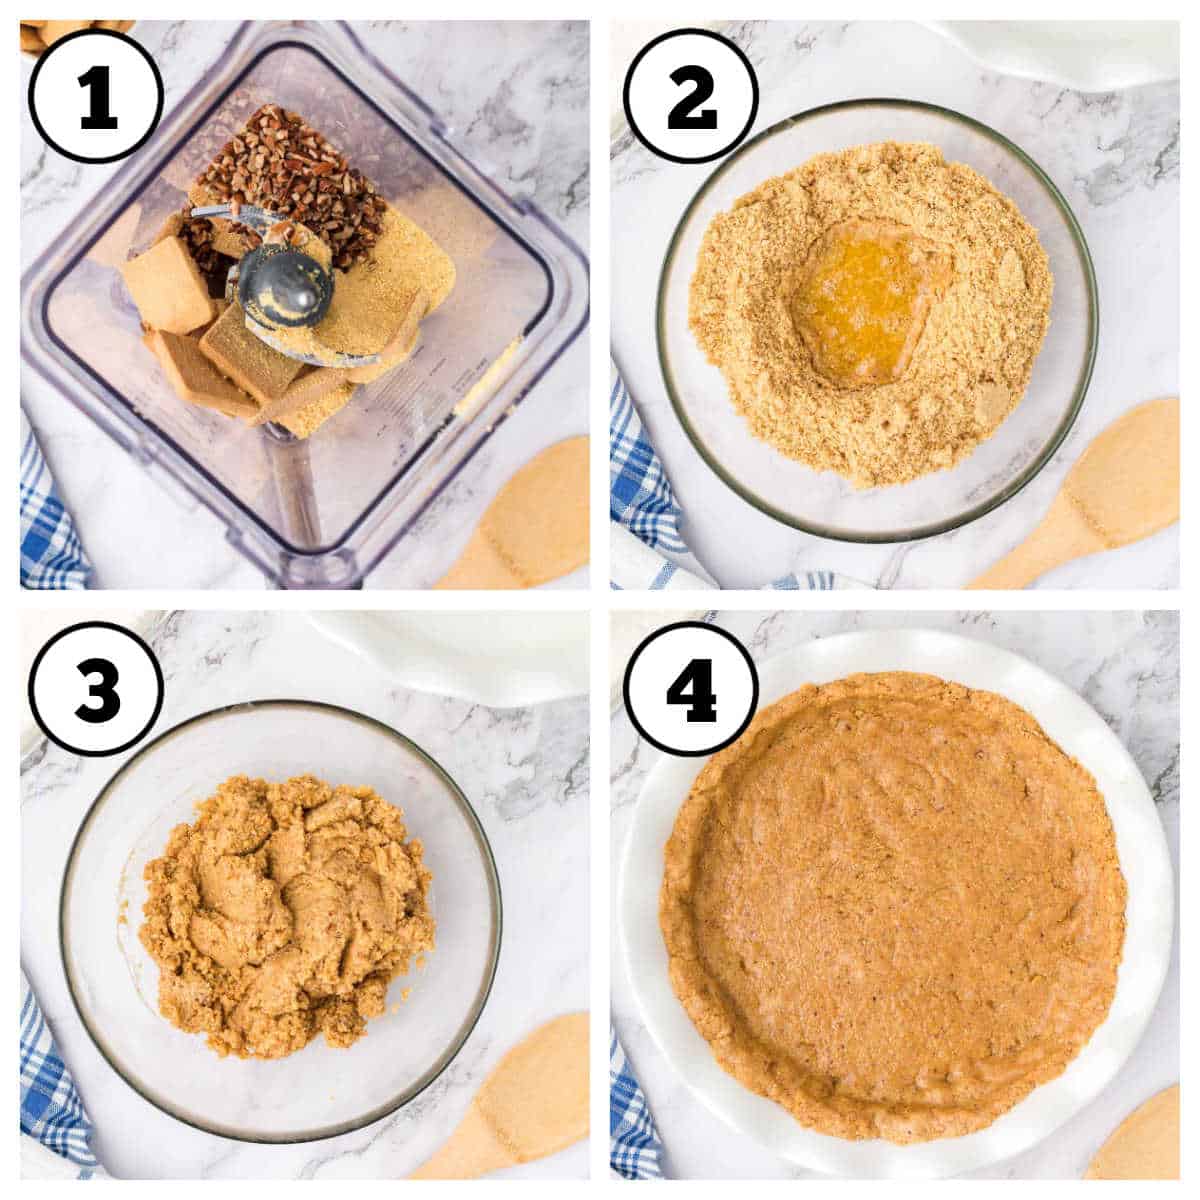 Image collage of steps 1-4 for possum pie recipe.